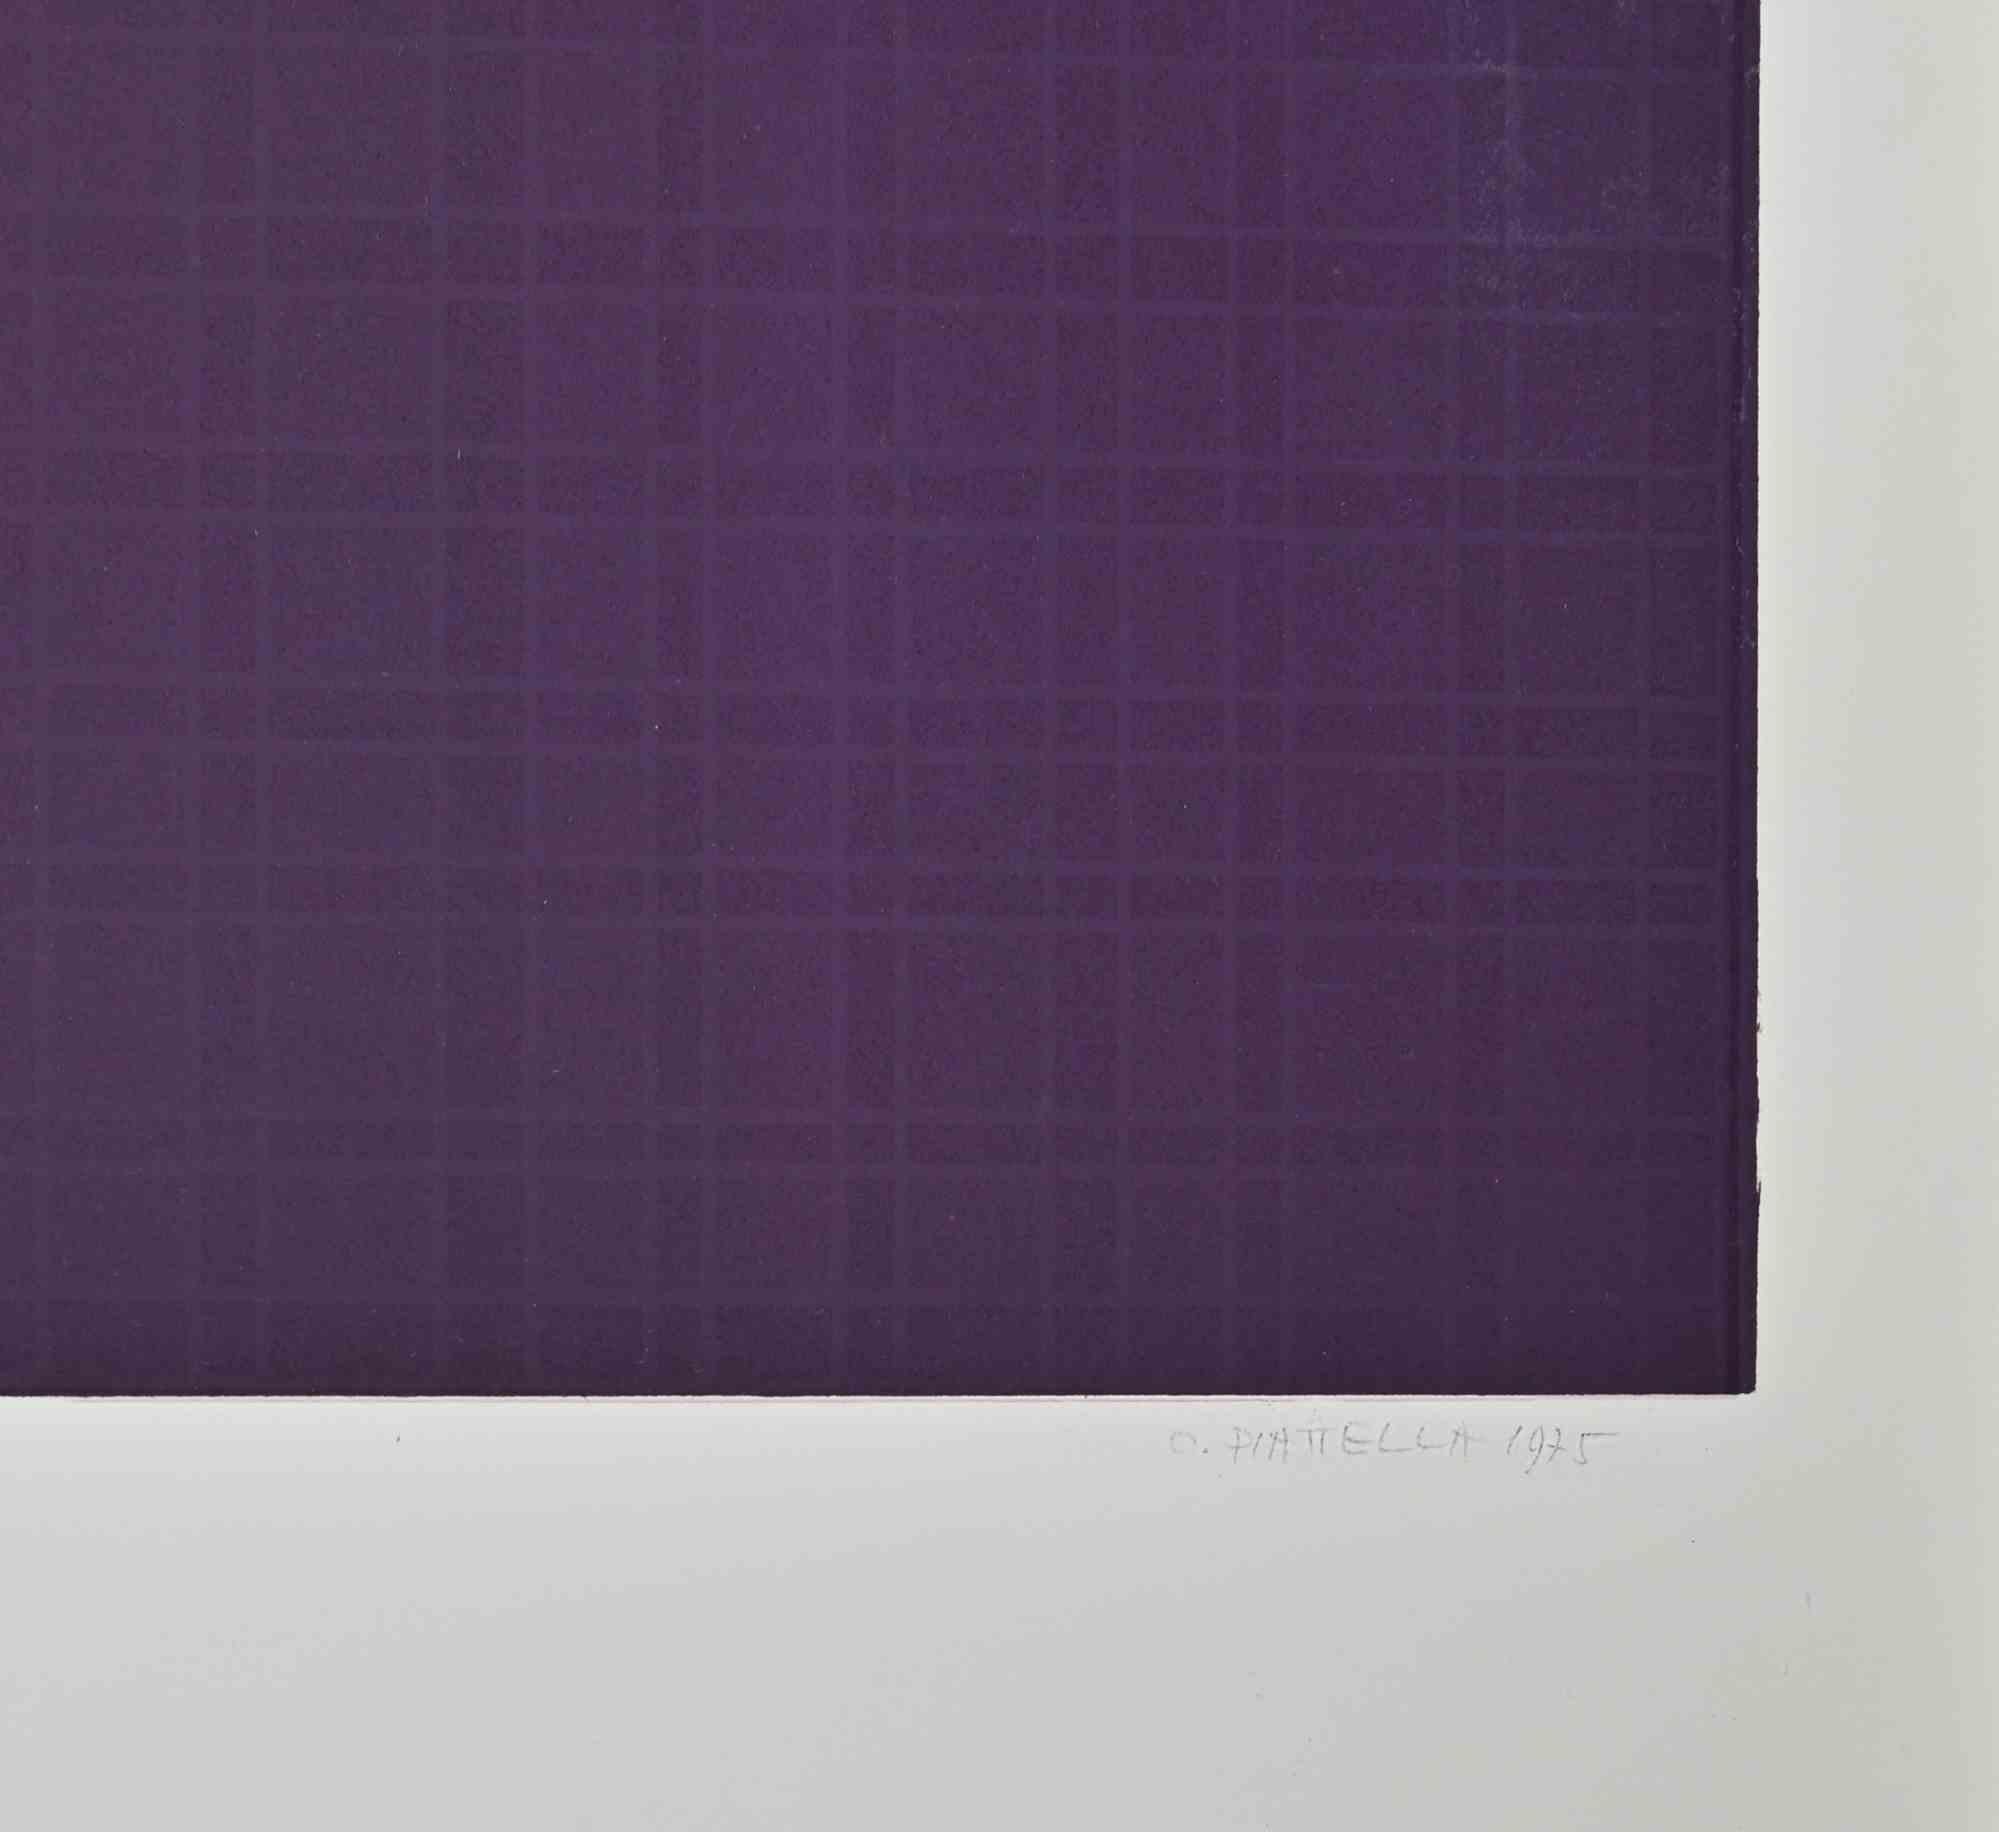 Violet composition - Etching by Oscar Piattella - 1975 For Sale 1